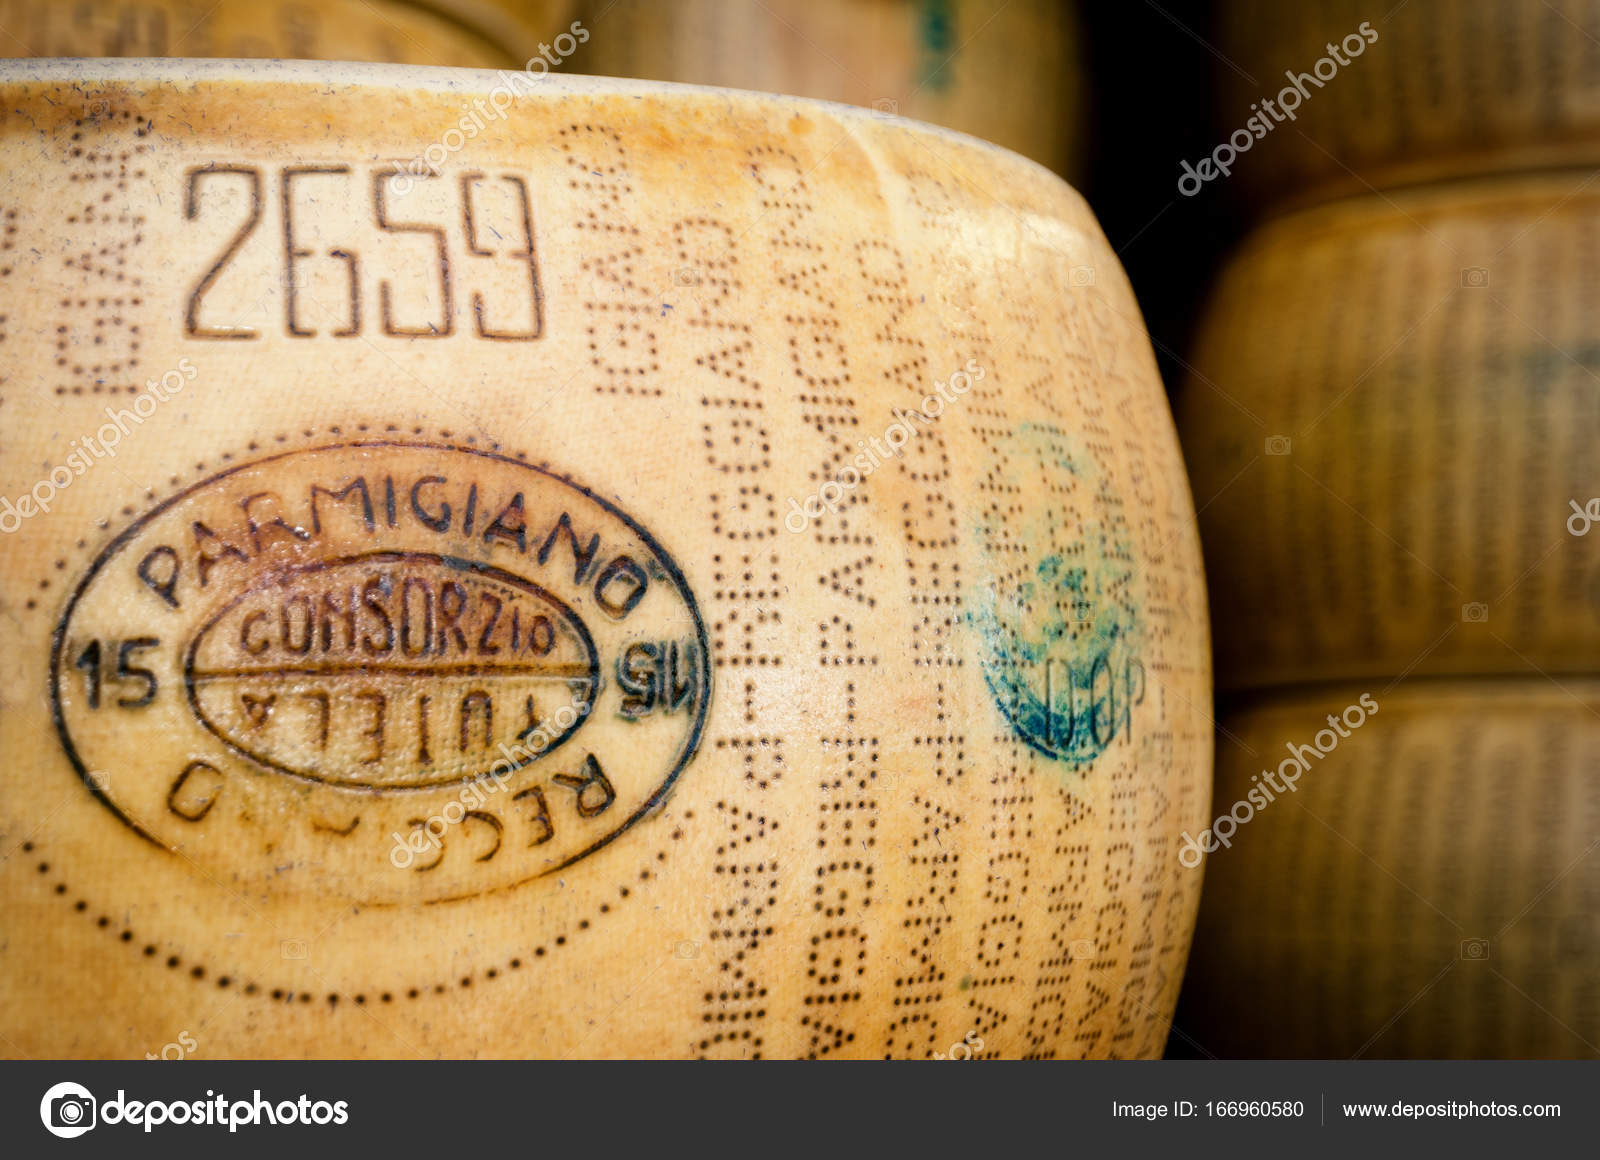 https://st3.depositphotos.com/9826632/16696/i/1600/depositphotos_166960580-stock-photo-many-parmigiano-reggiano-cheese-wheels.jpg